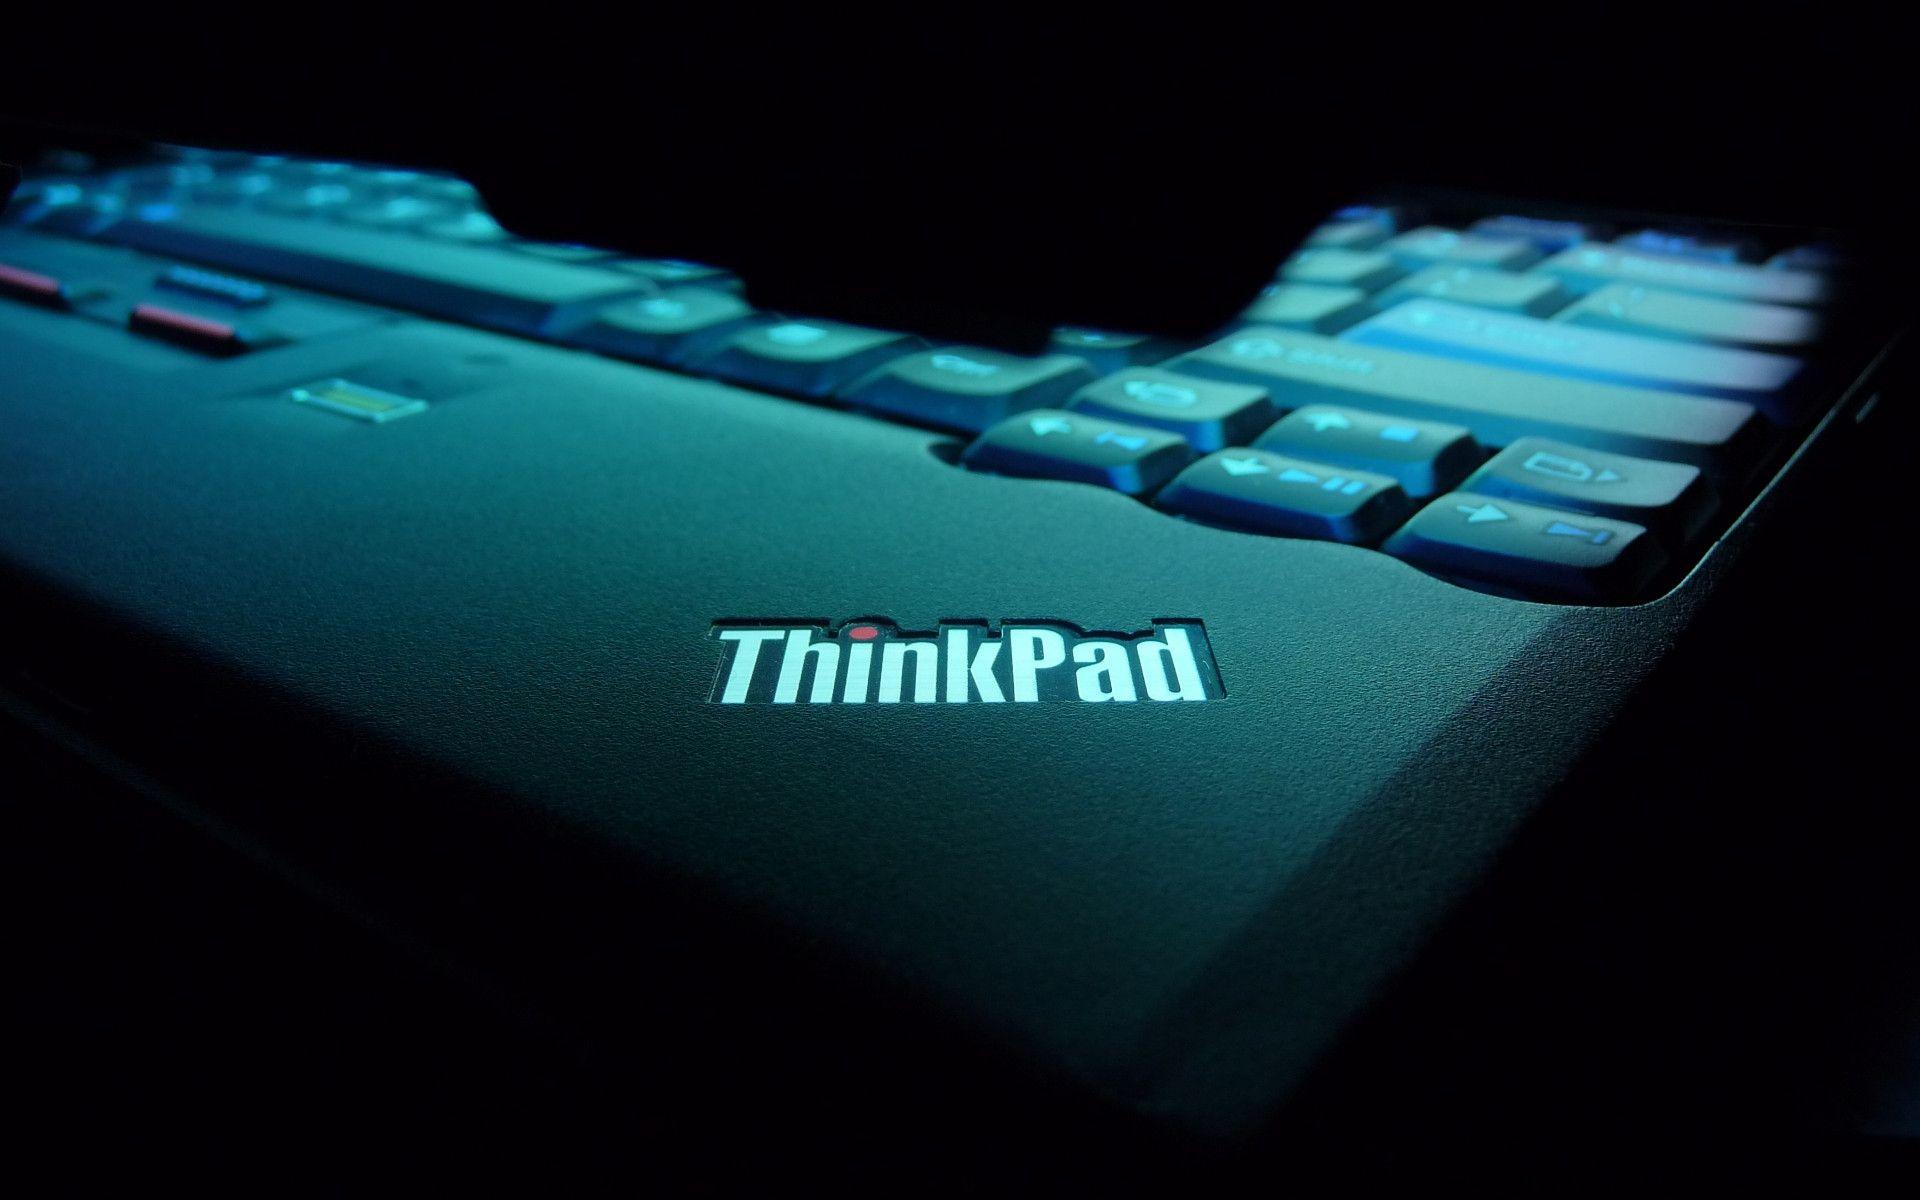 Thinkpad Laptop in Logos